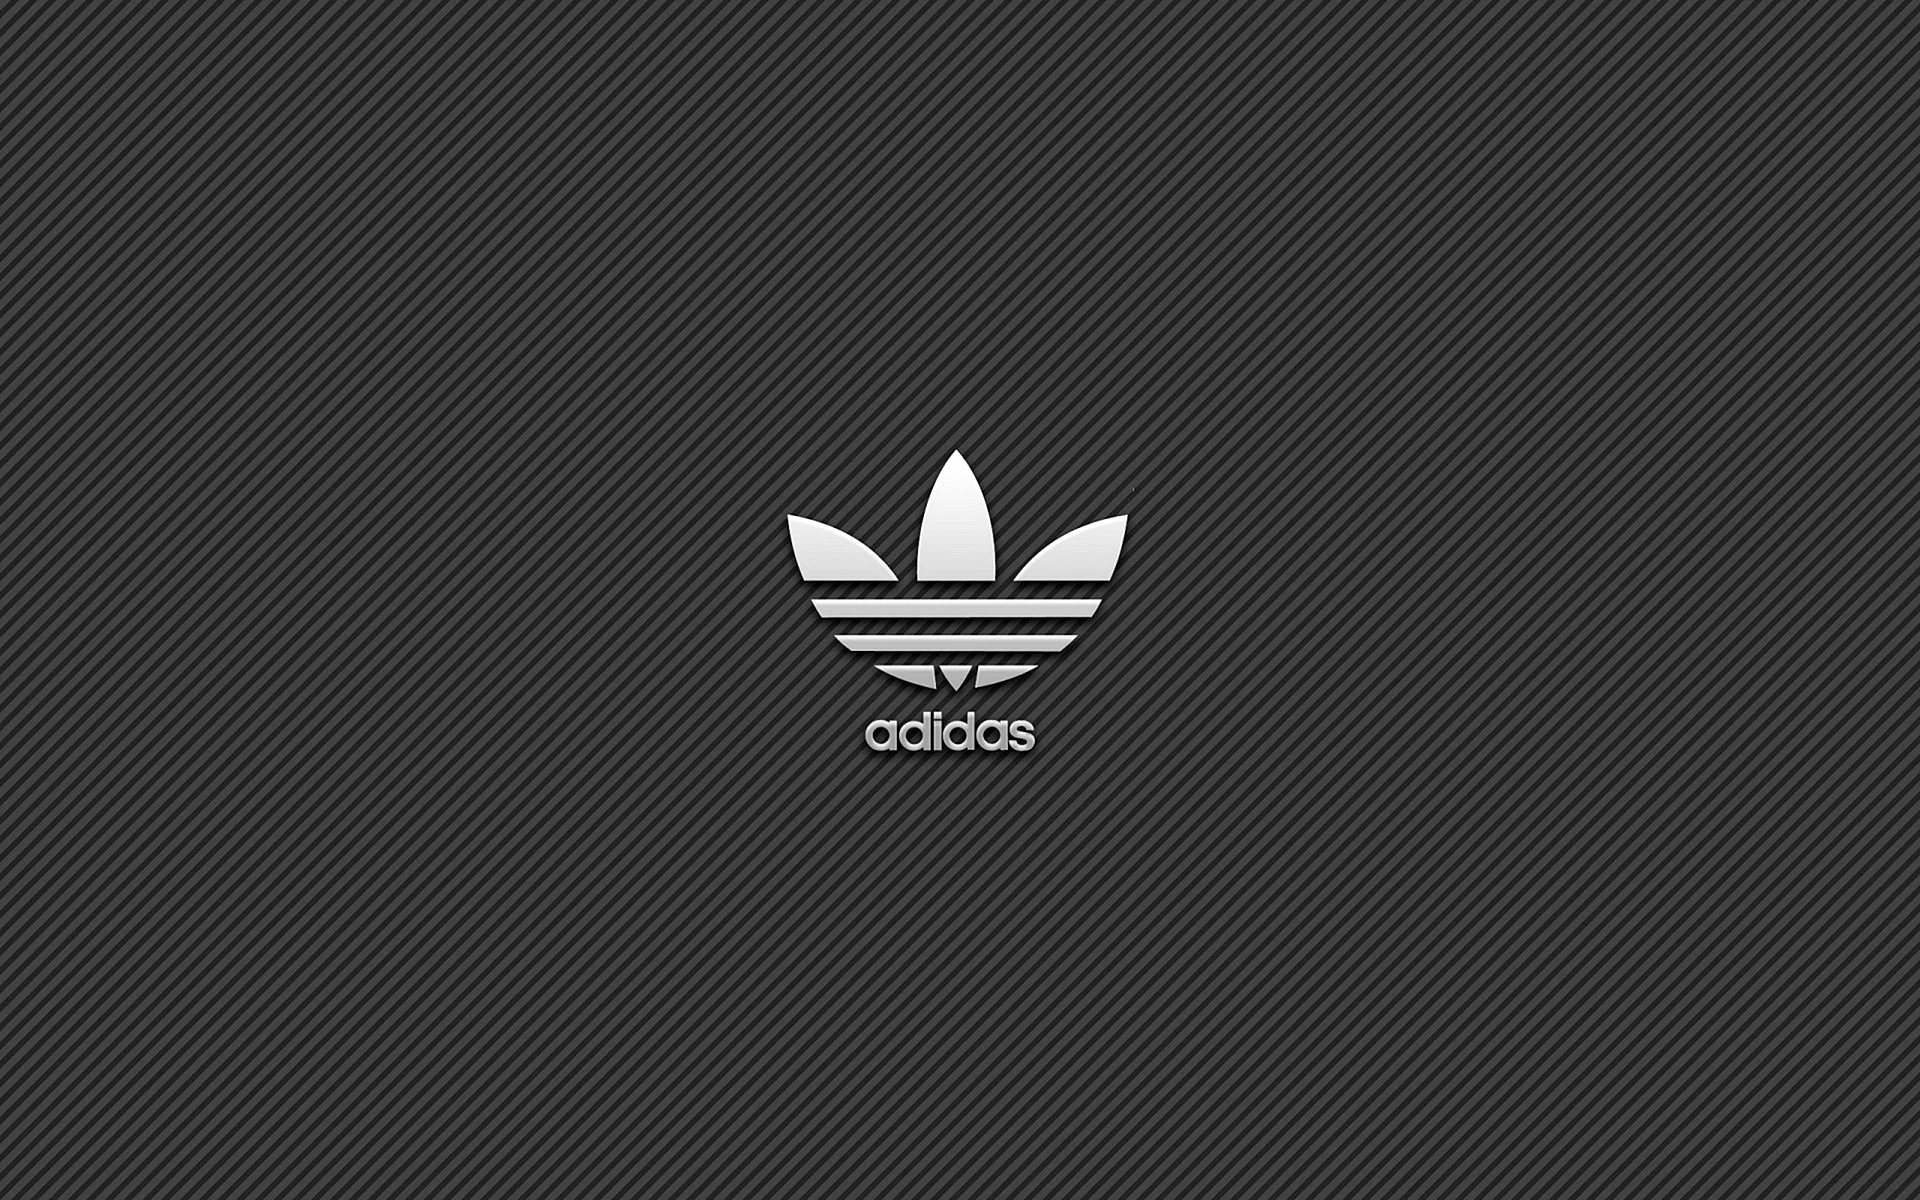 Adidas Yeezy logo